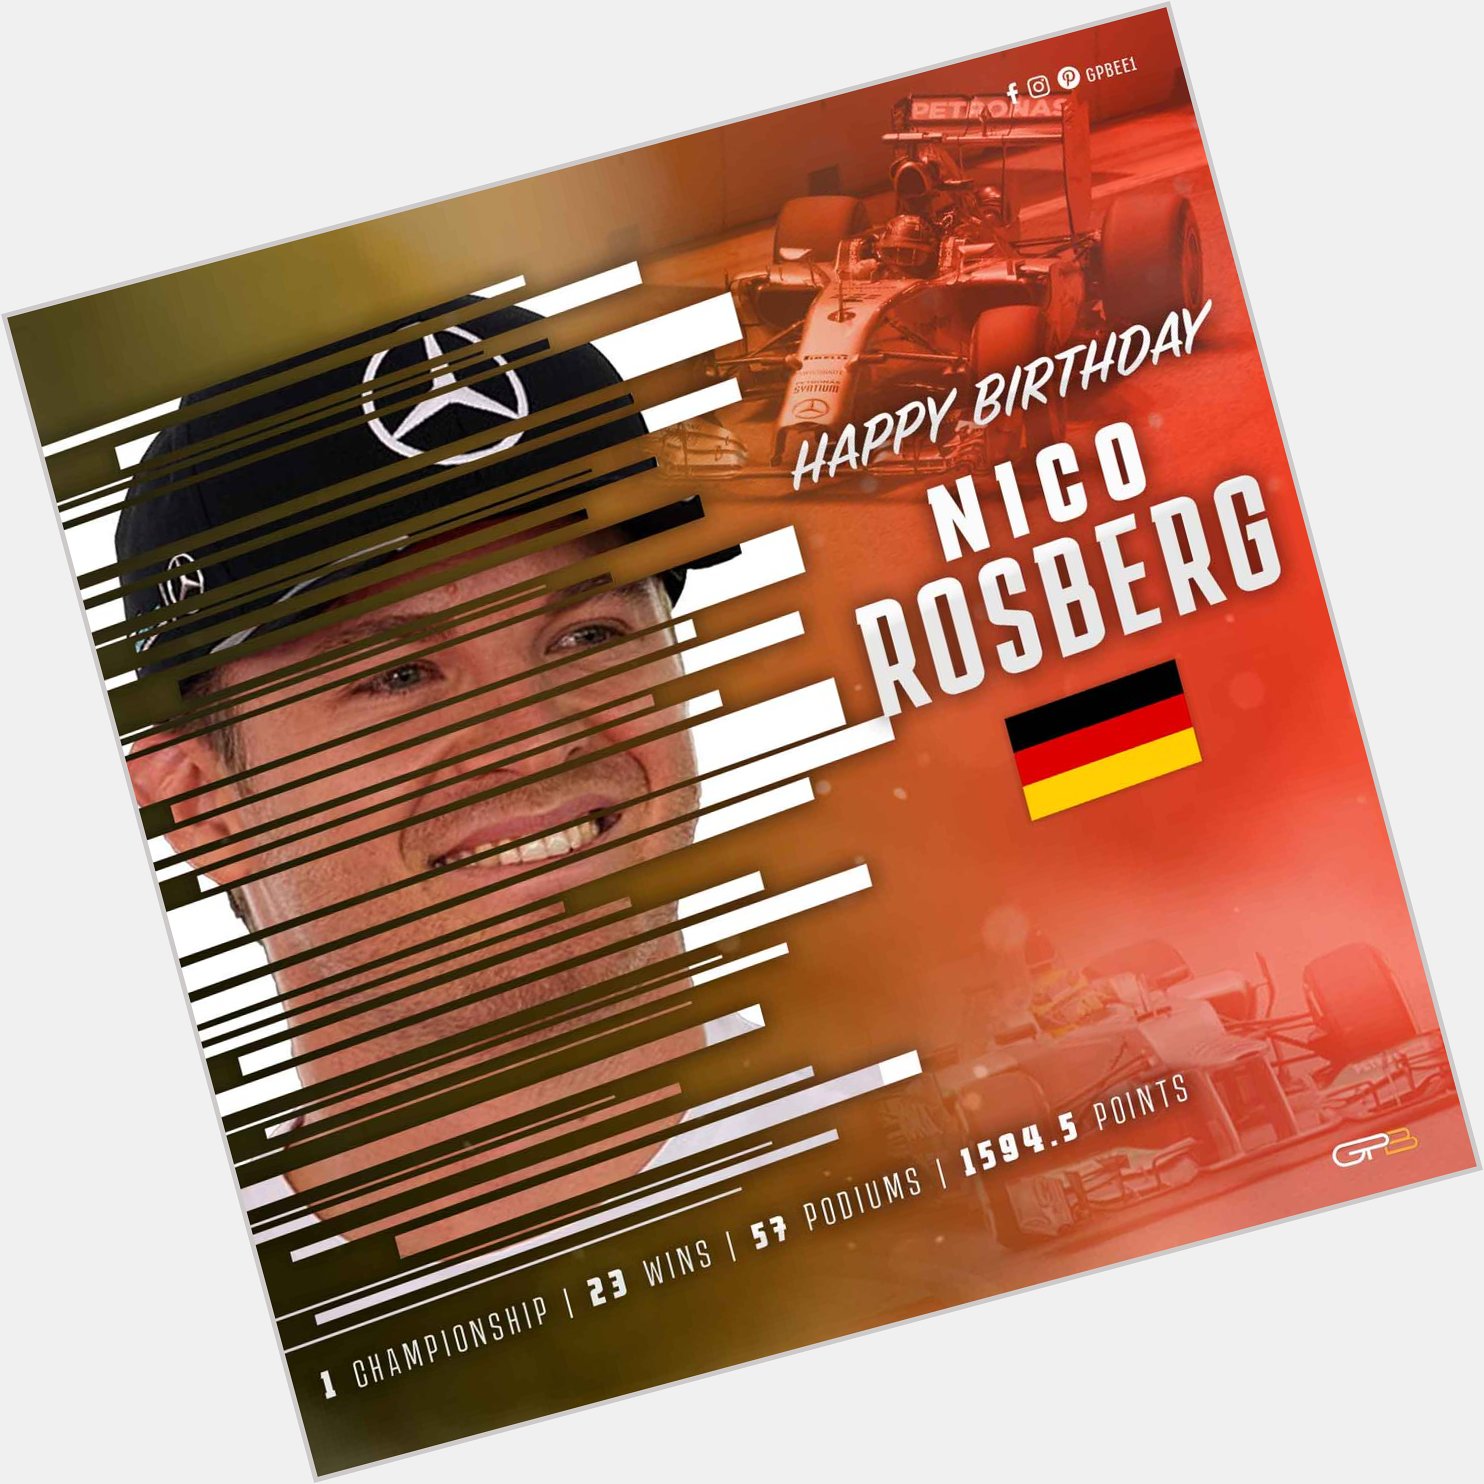 HAPPY BIRTHDAY to Nico Rosberg!   .
.
.
. 